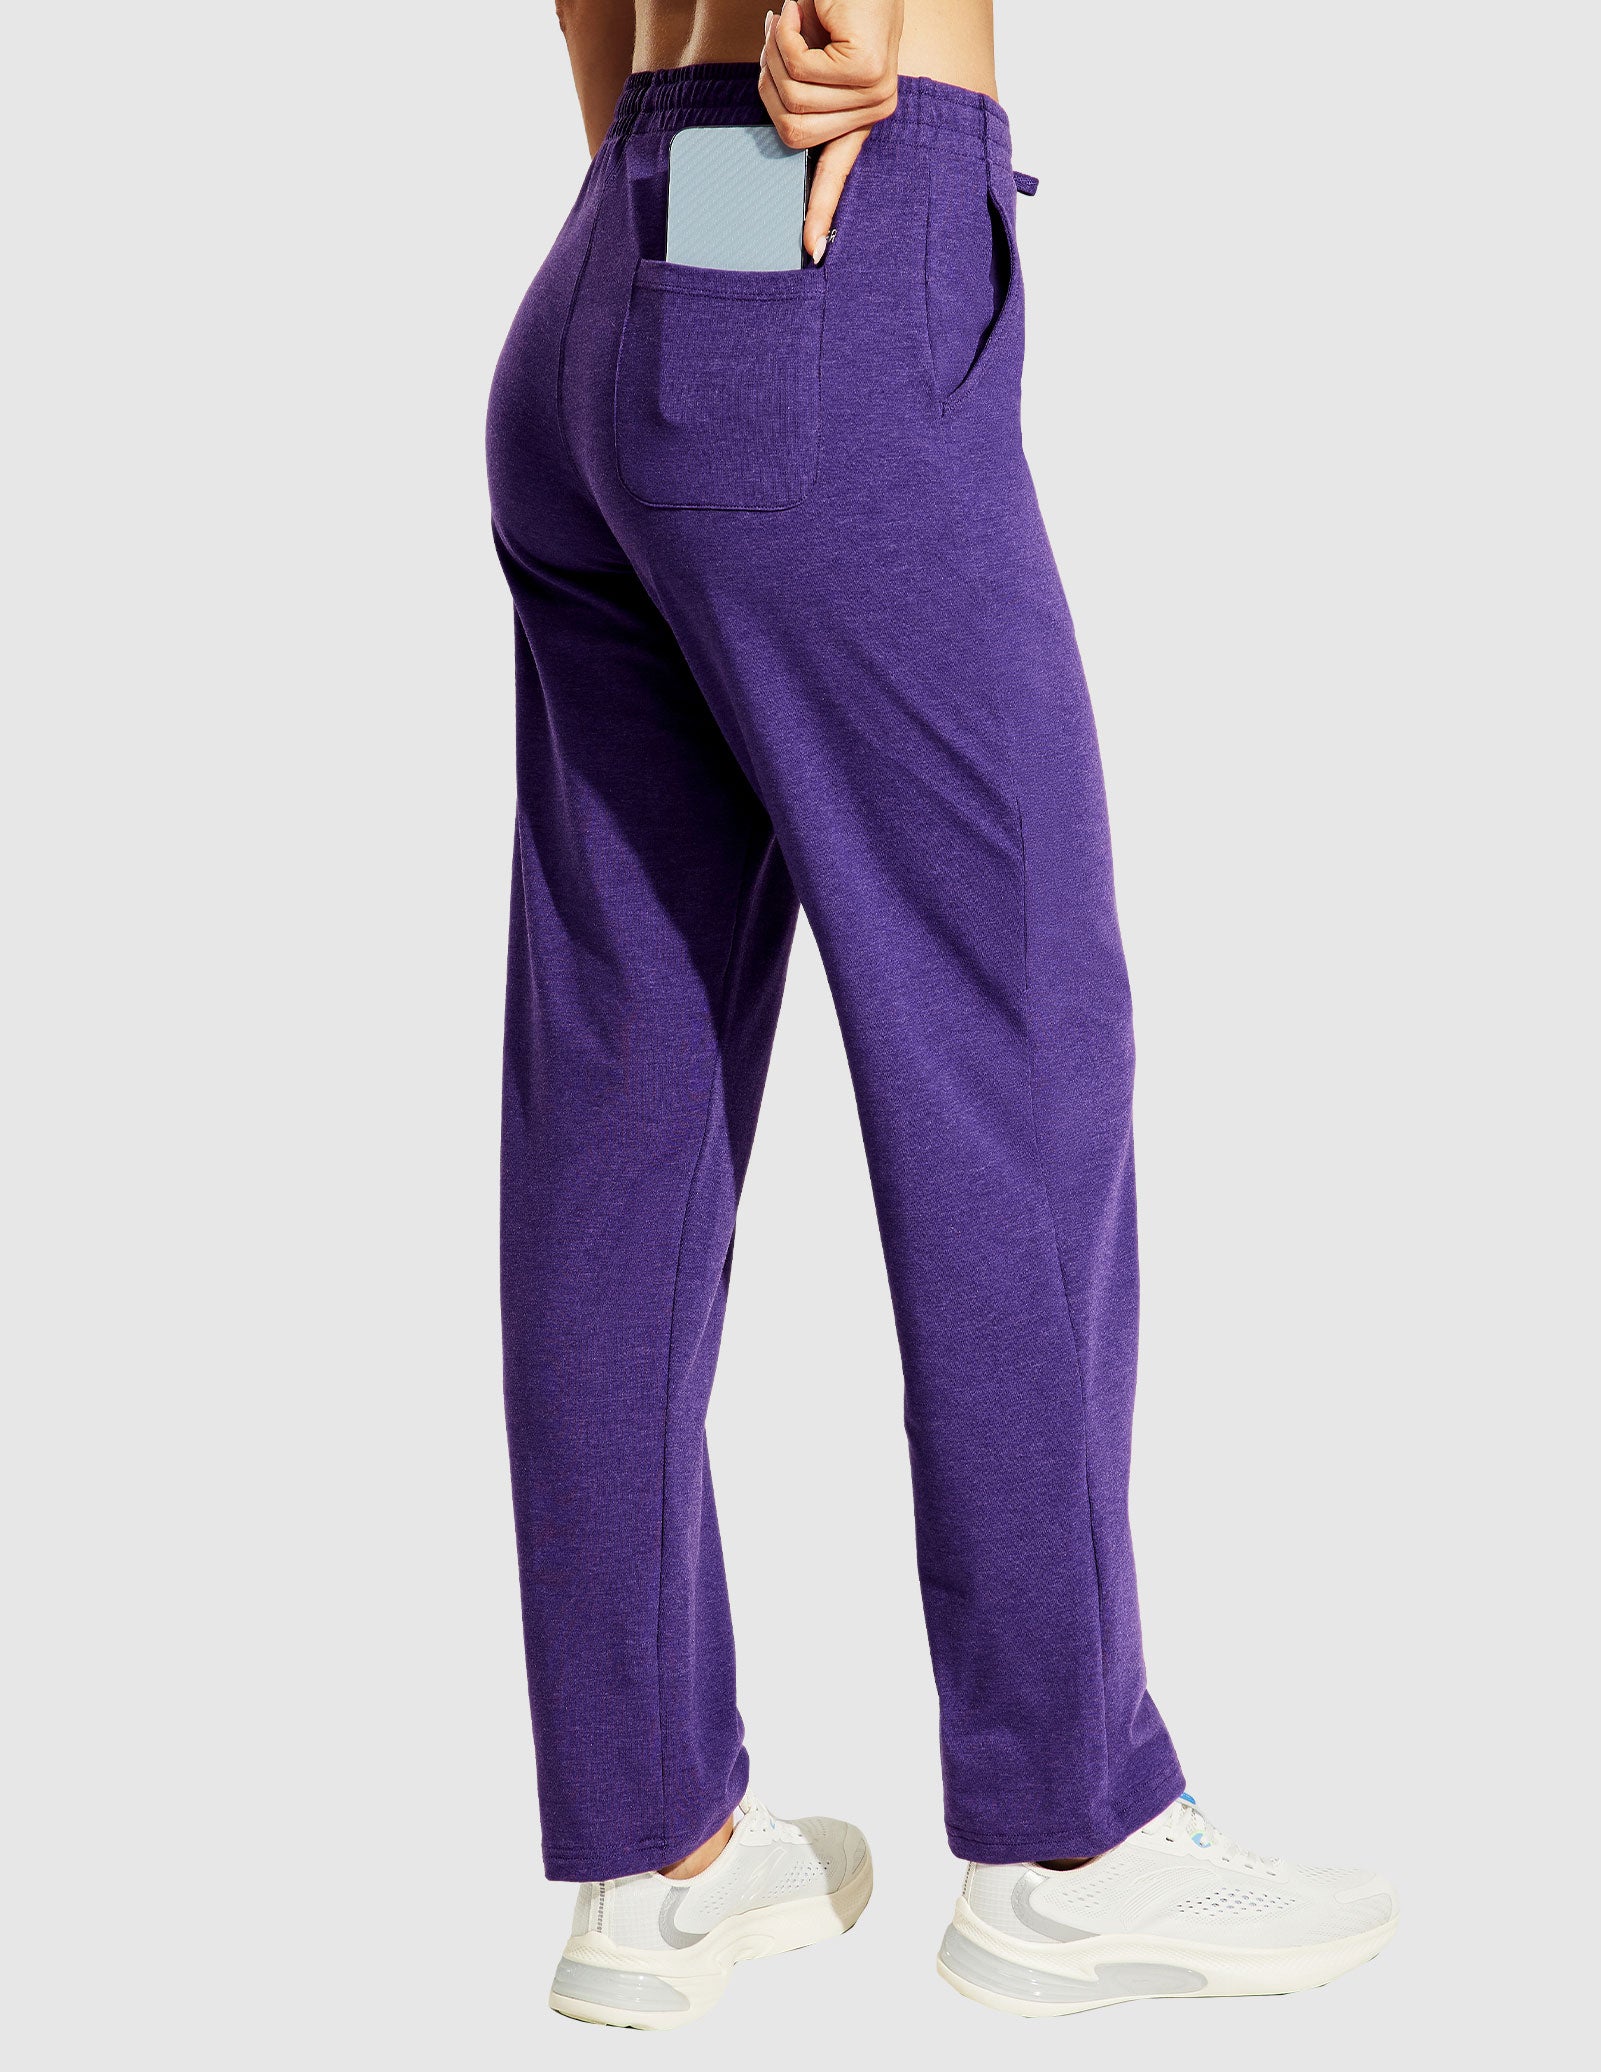 Women's Cotton Sweatpants Casual Drawstring Pants